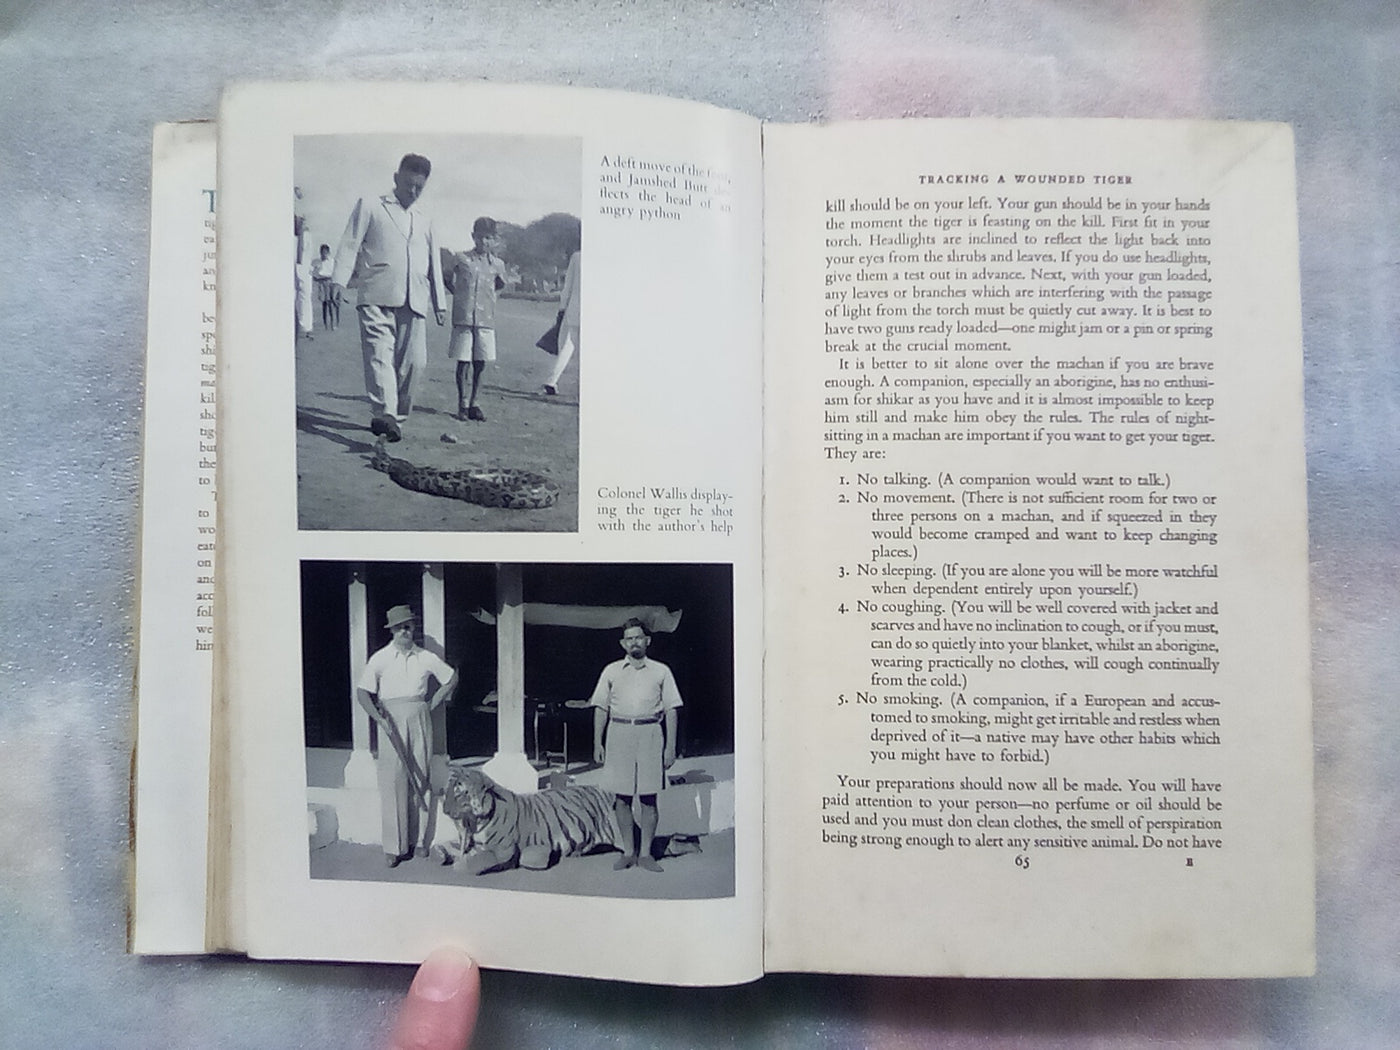 Shikar - Big Game Hunting in India (1963) by K. S. J. Butt (Rare book)